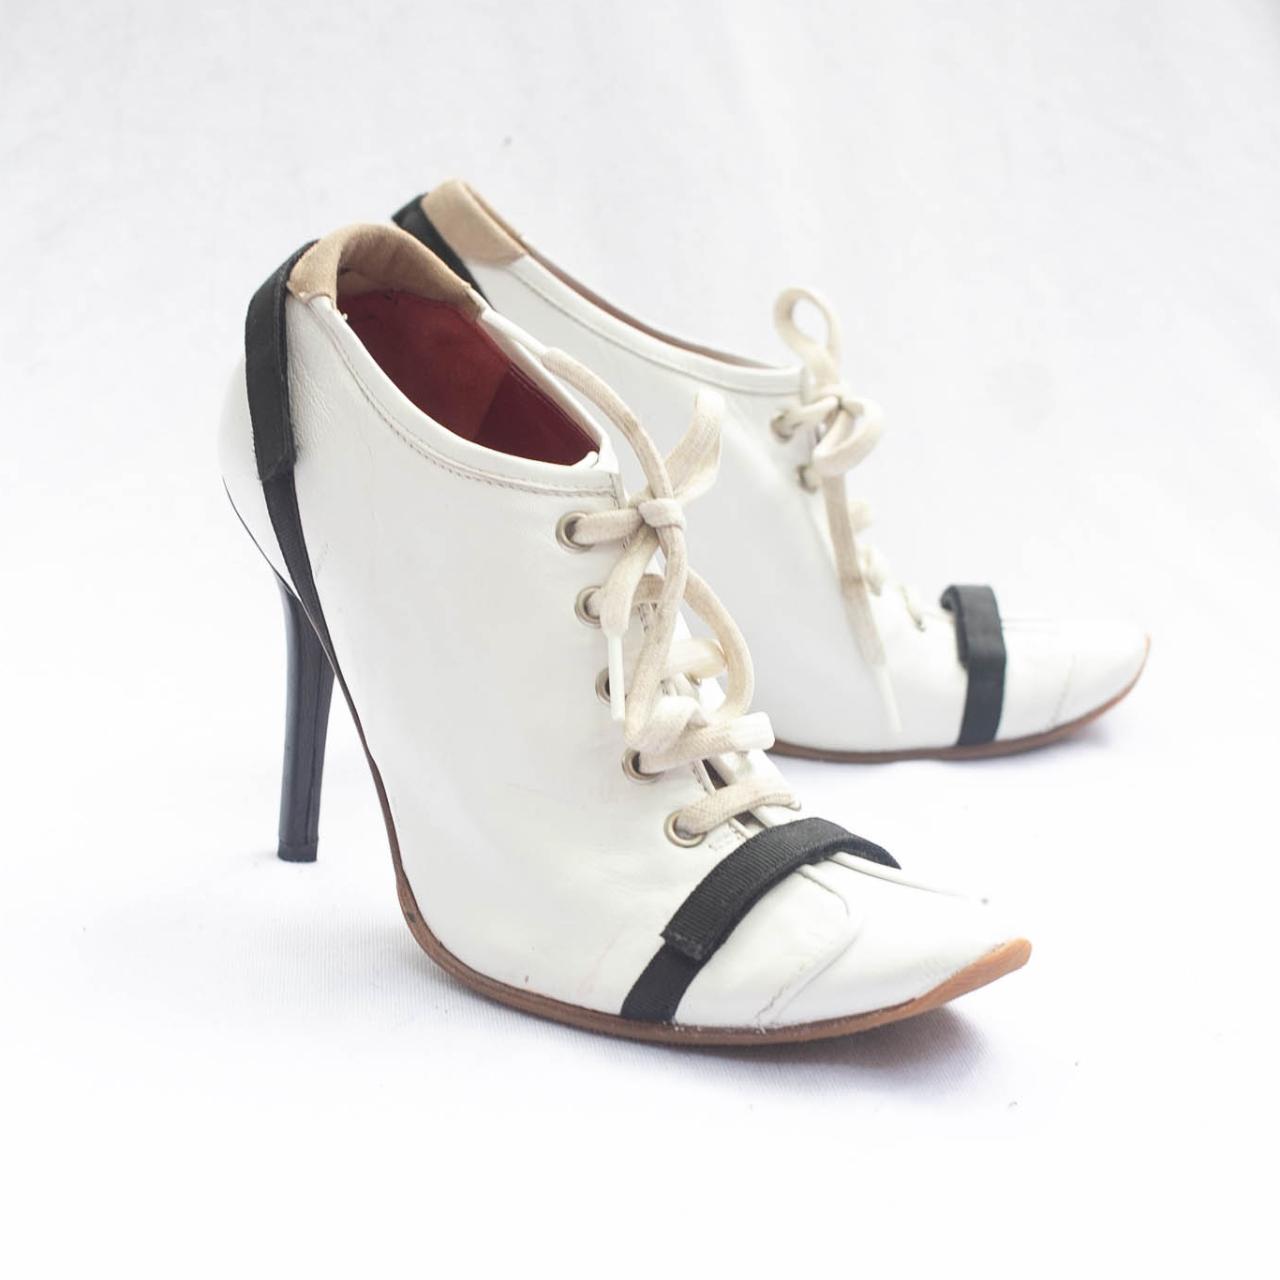 Gianfranco Ferre leather heels. These are floor... - Depop